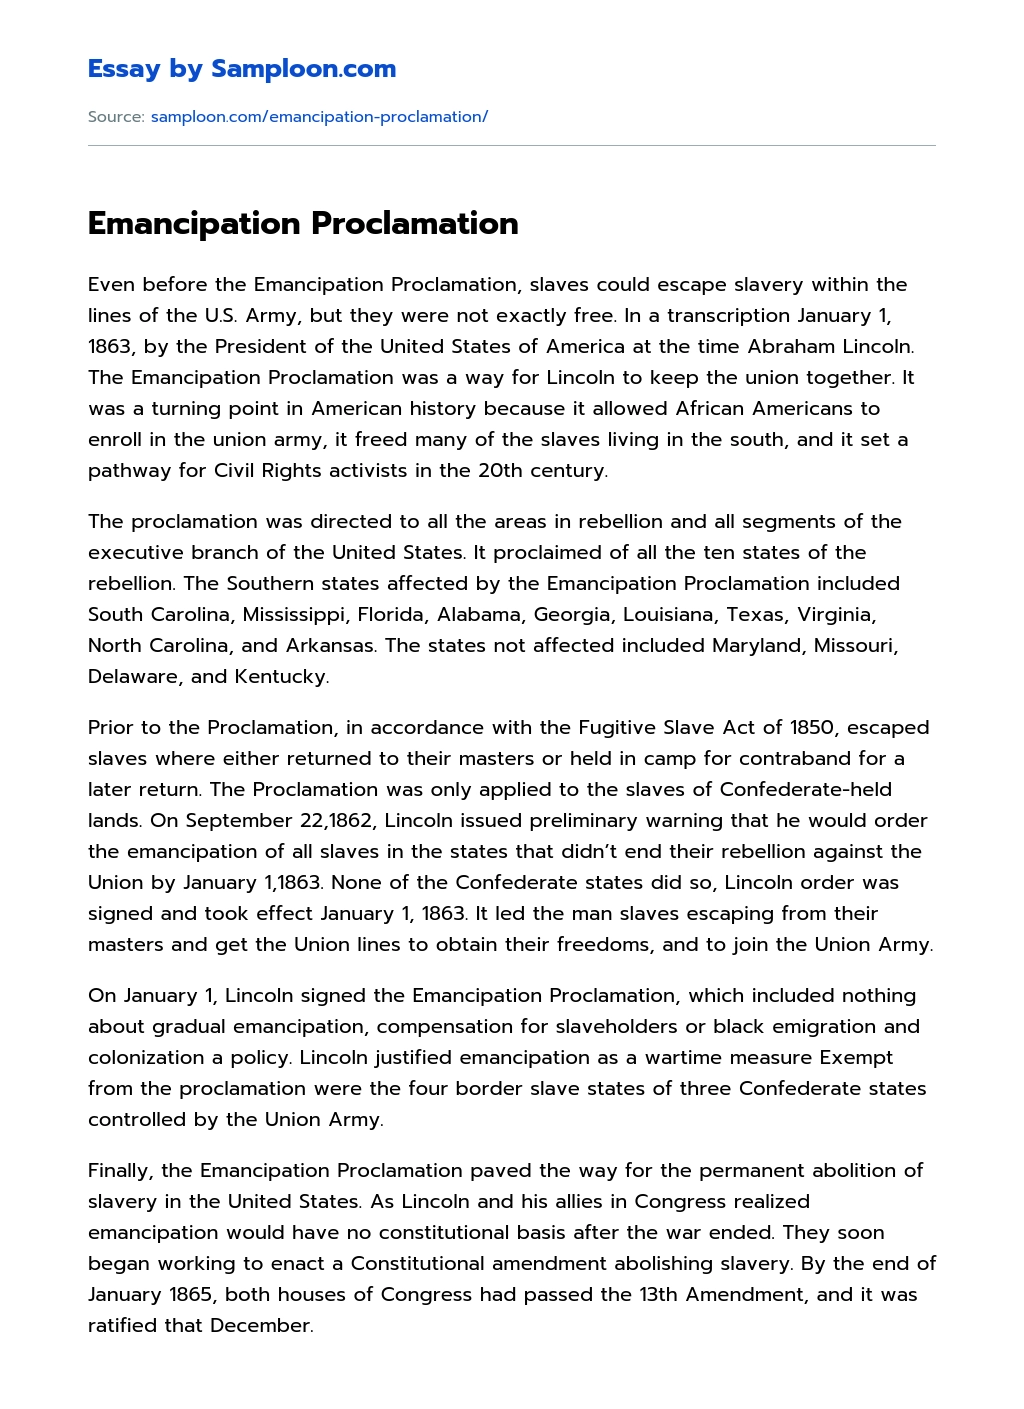 Emancipation Proclamation essay